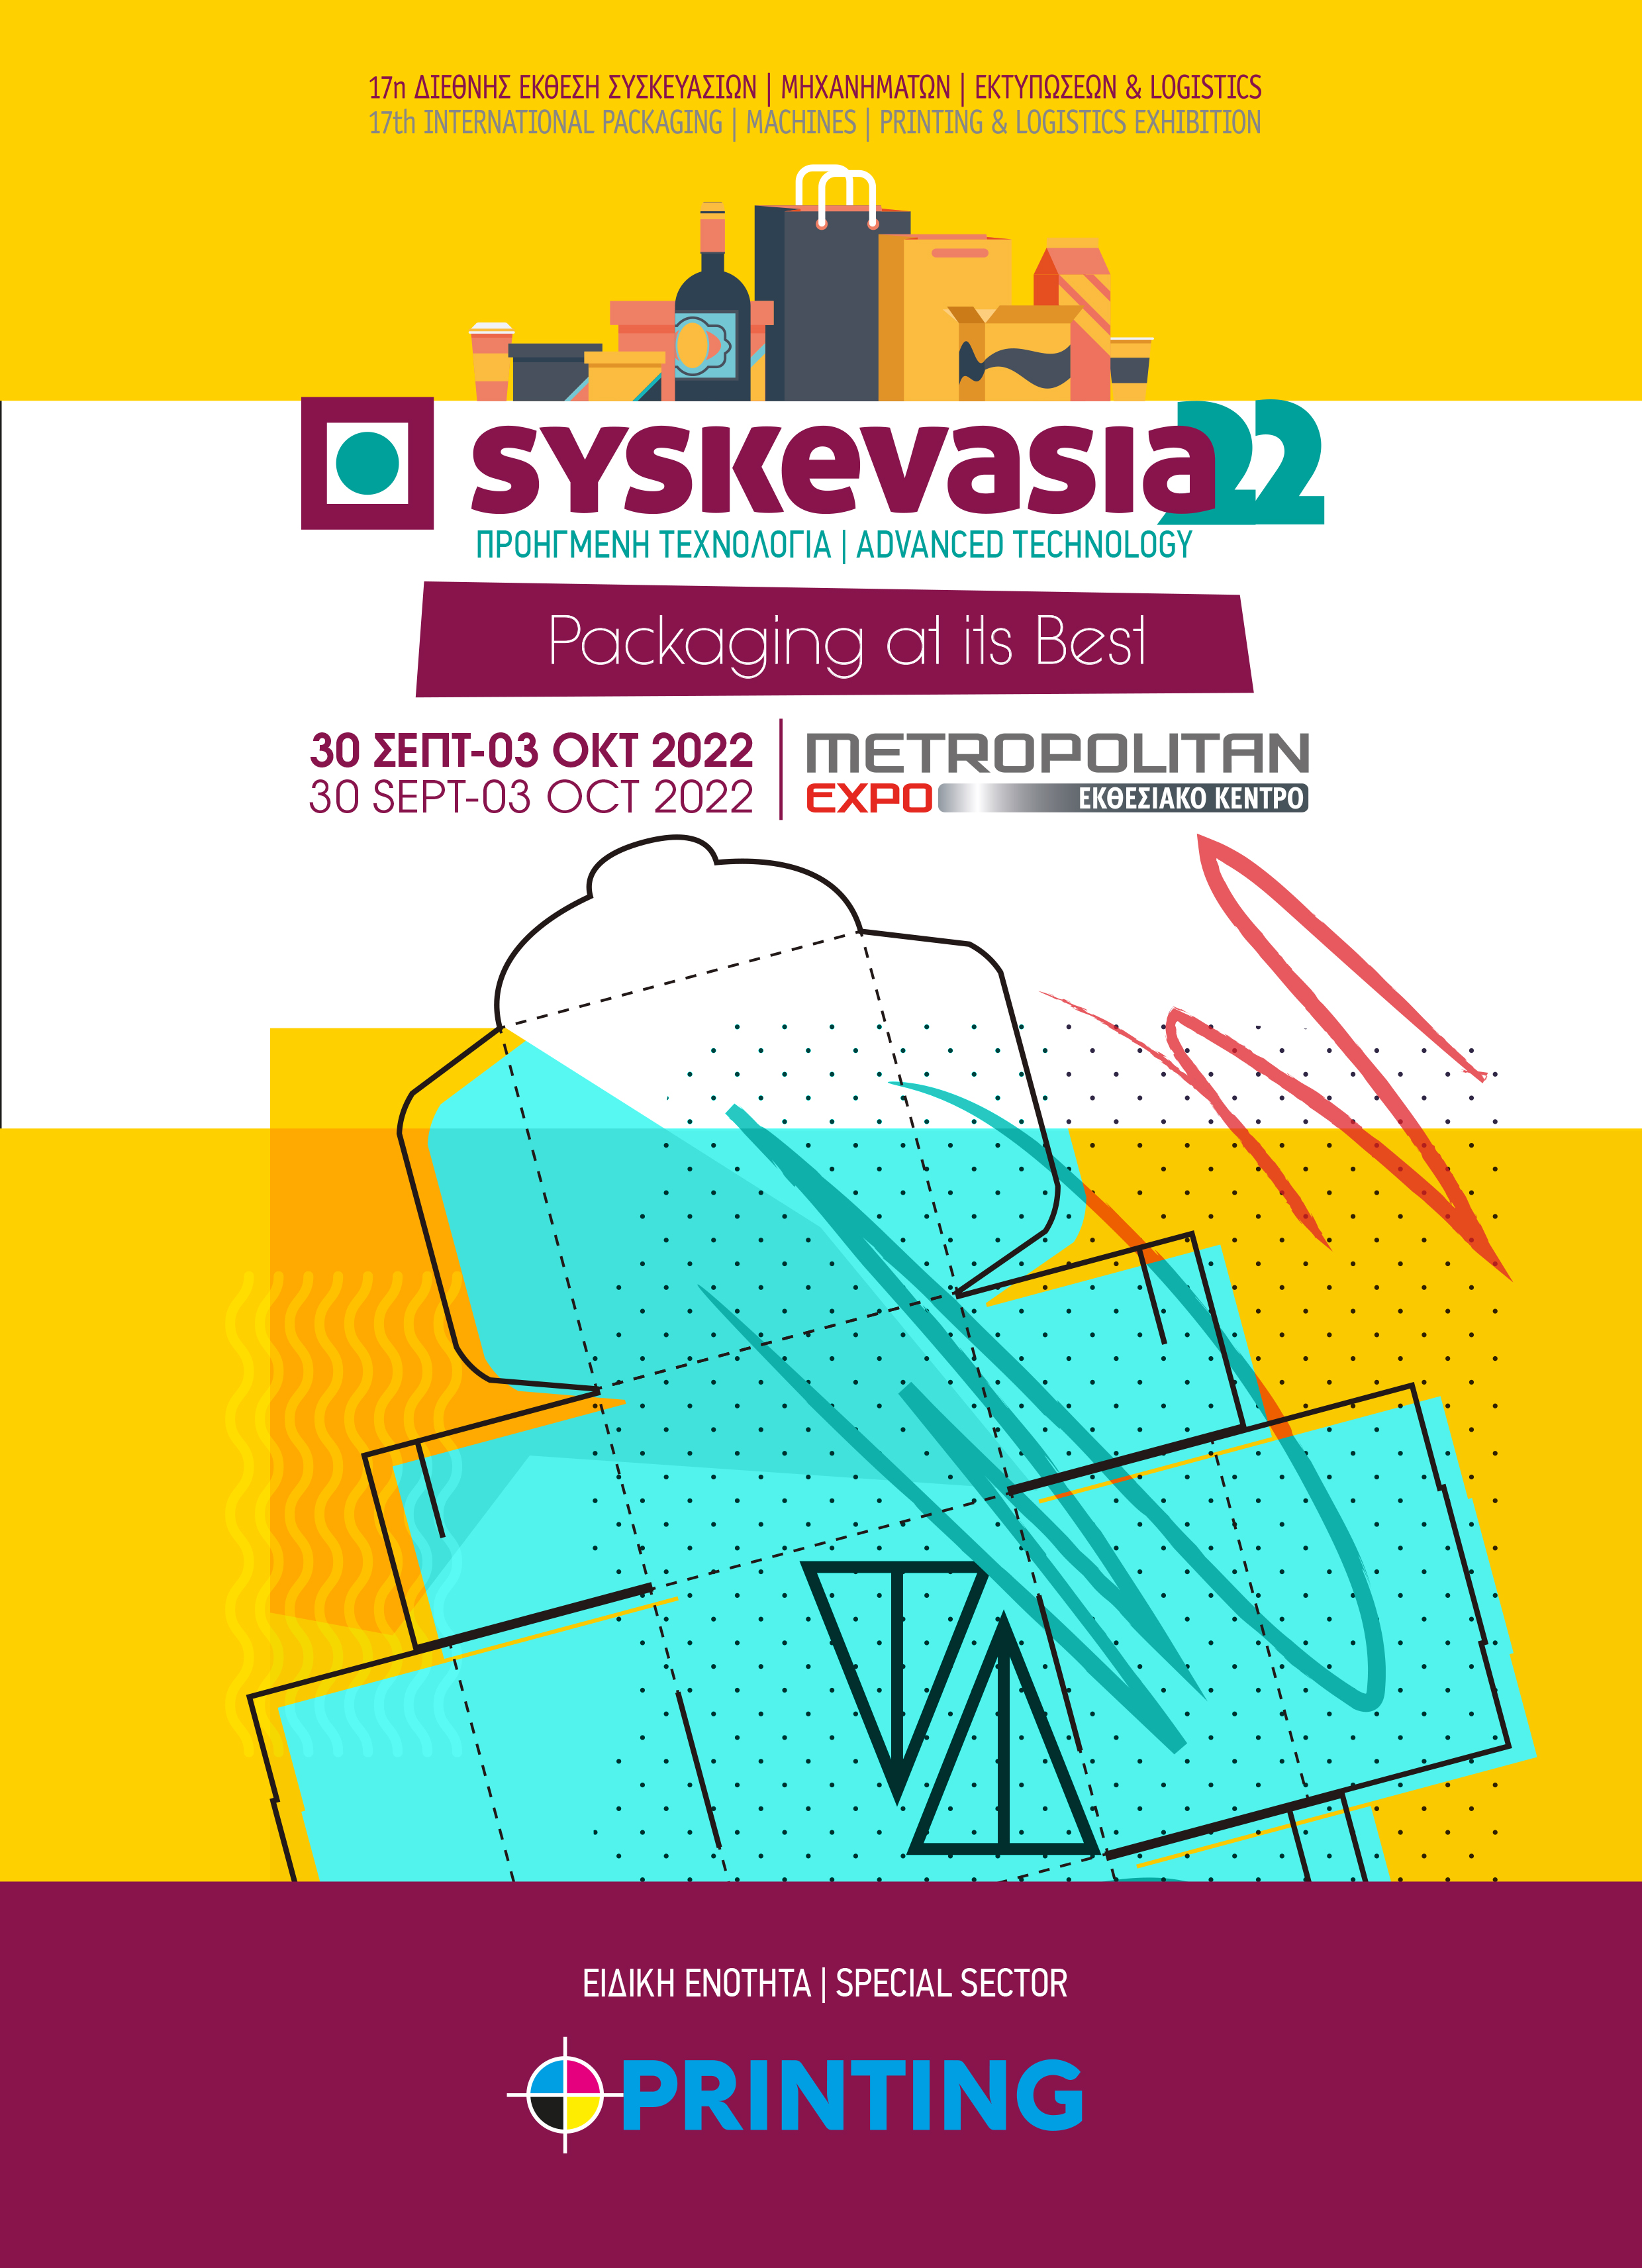 ArvanitiShop at SYSKEVASIA22 Exhibition 2022